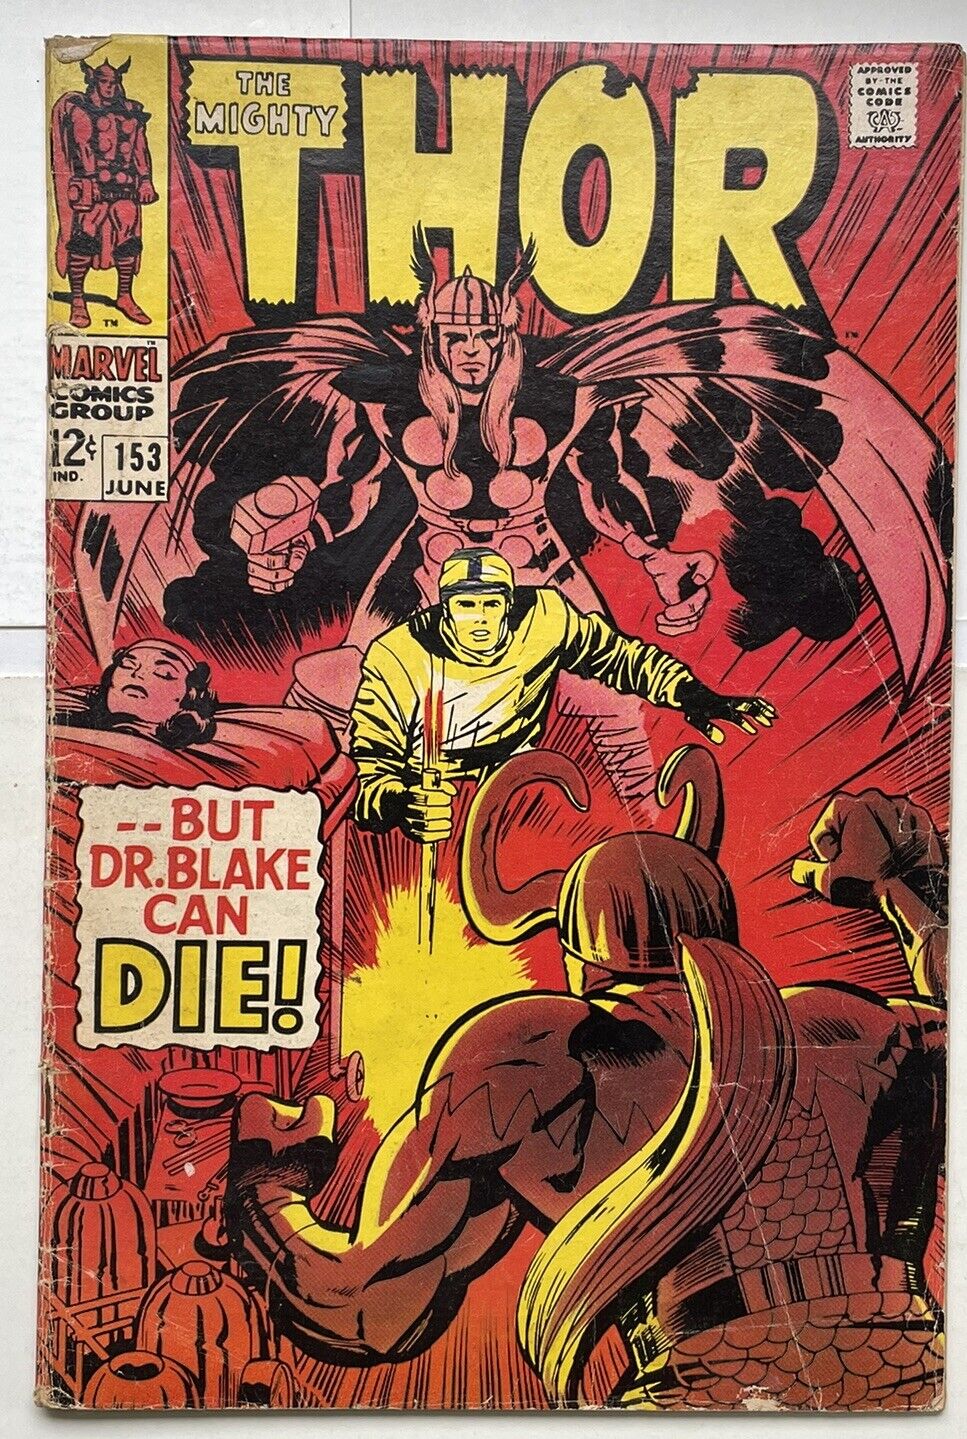 The Mighty Thor #153 - Marvel Comics -1968